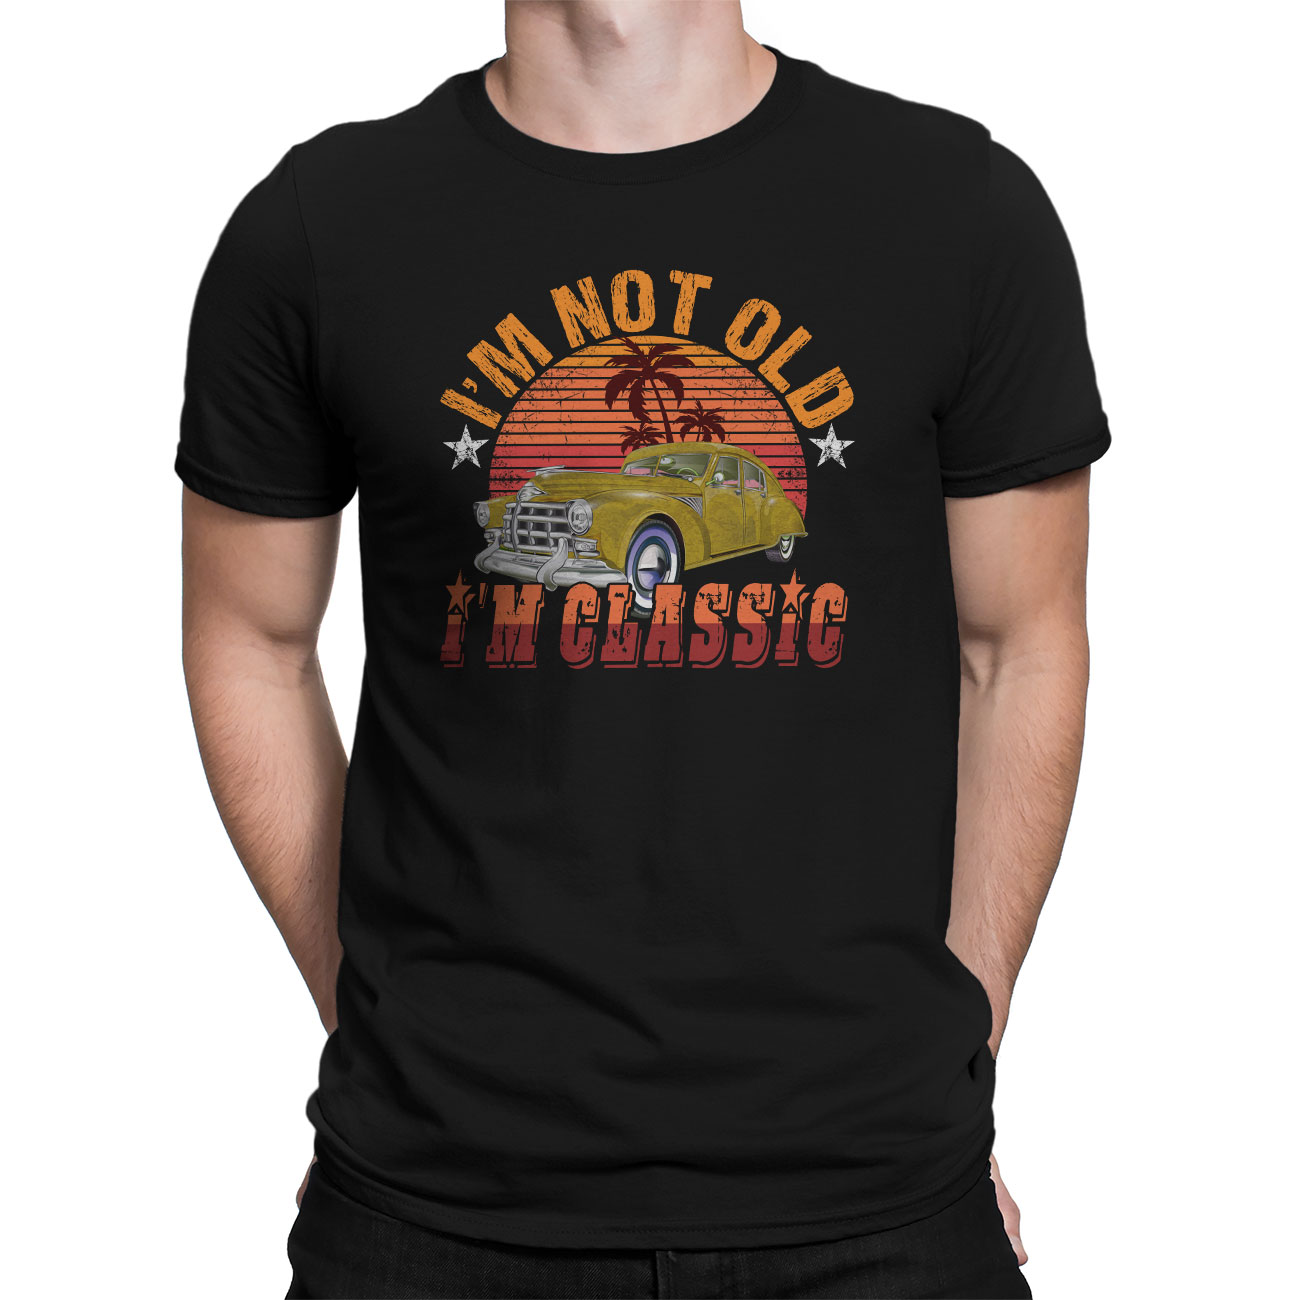 Short Sleeve T-Shirts for Men Shirts Classic Vintage Tee Shirts